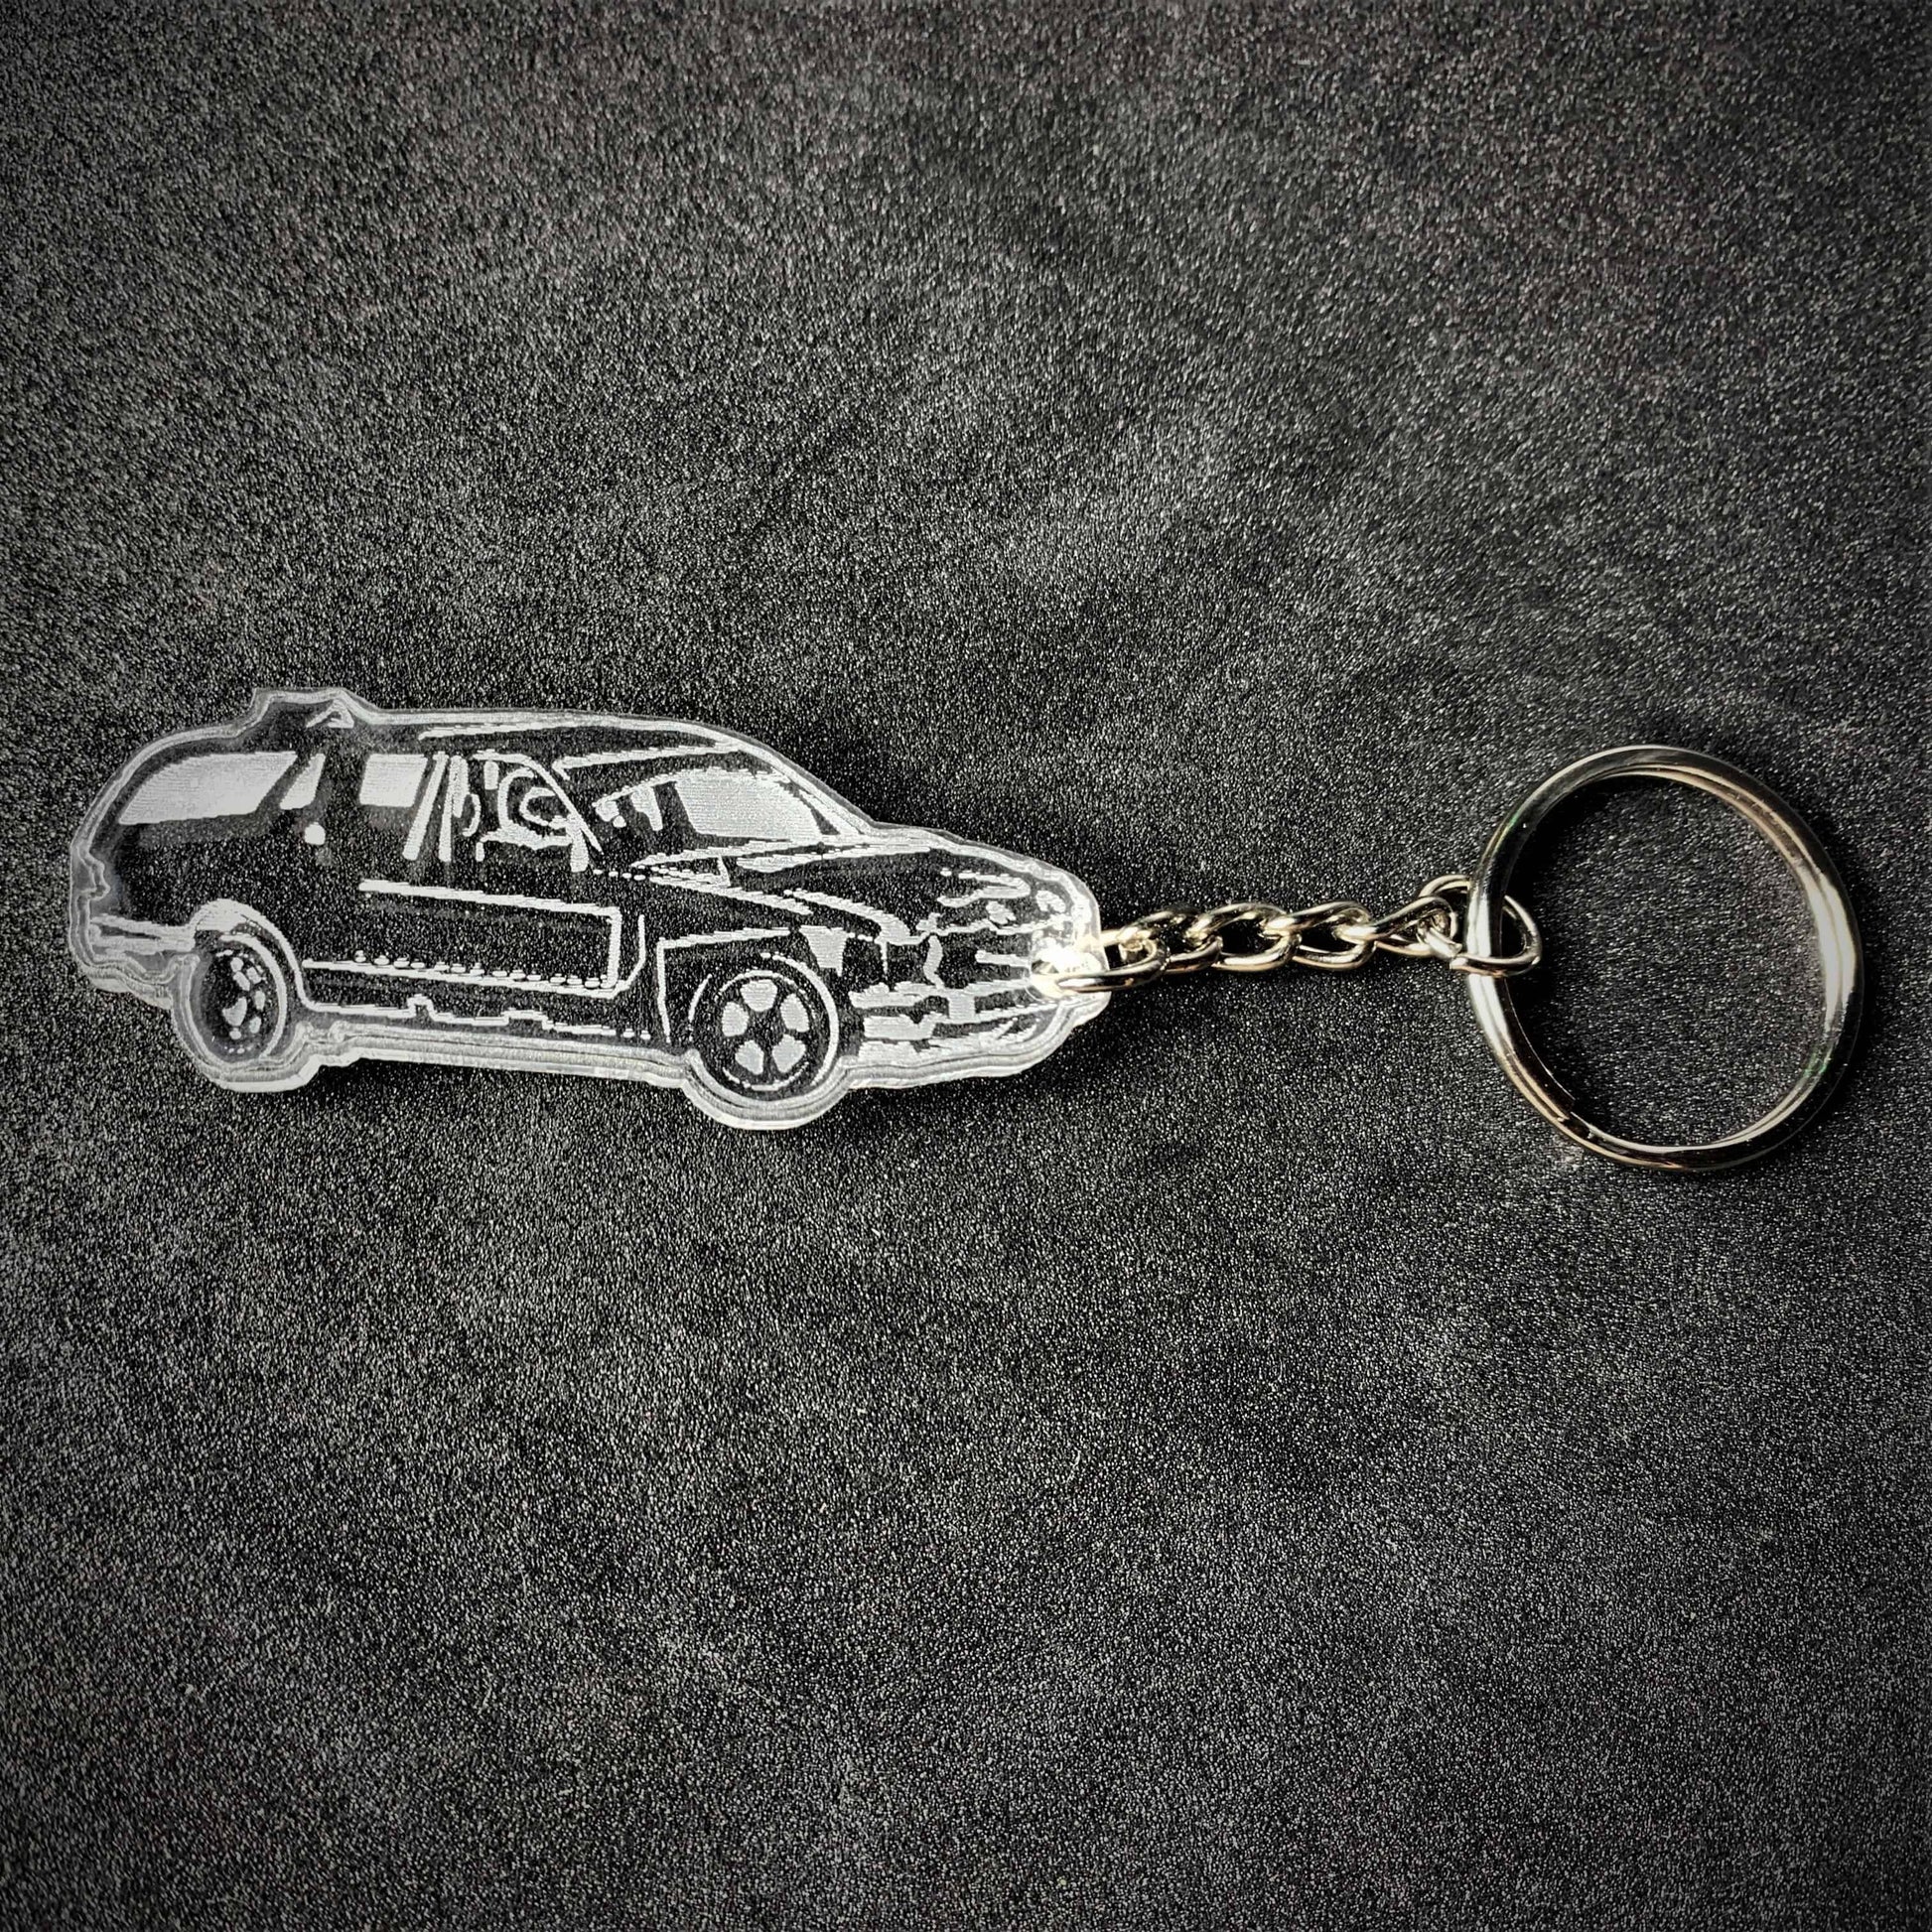 Mercedes Banger Key Ring - Key Ring - Stock Car & Banger Toy Tracks